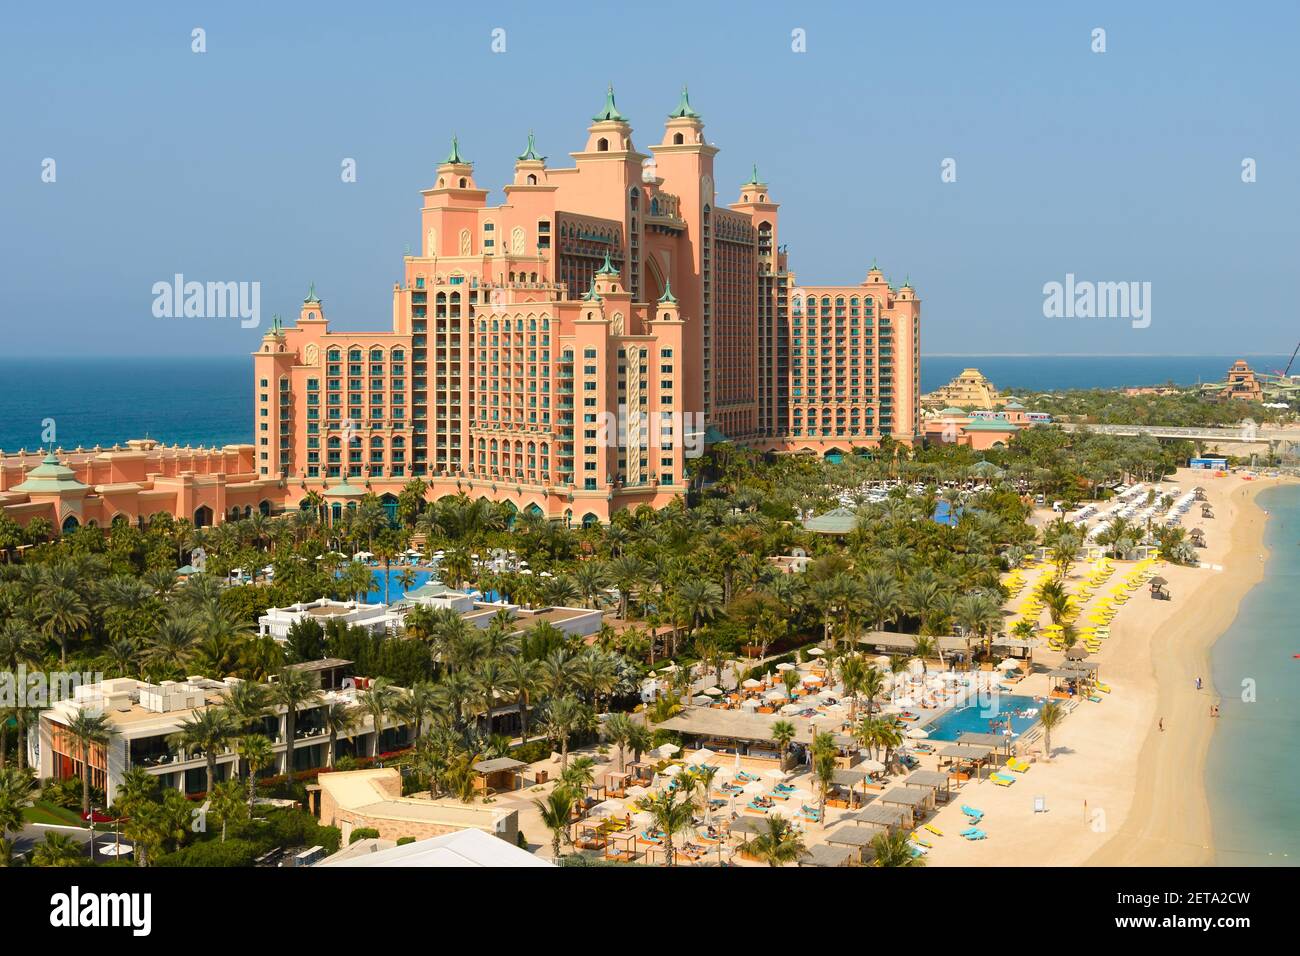 Atlantis The Palm Dubai Hotel located in Palm Jumeirah, United Arab Emirates. Beach of luxury Palm Resort aerial view in Dubai. Stock Photo